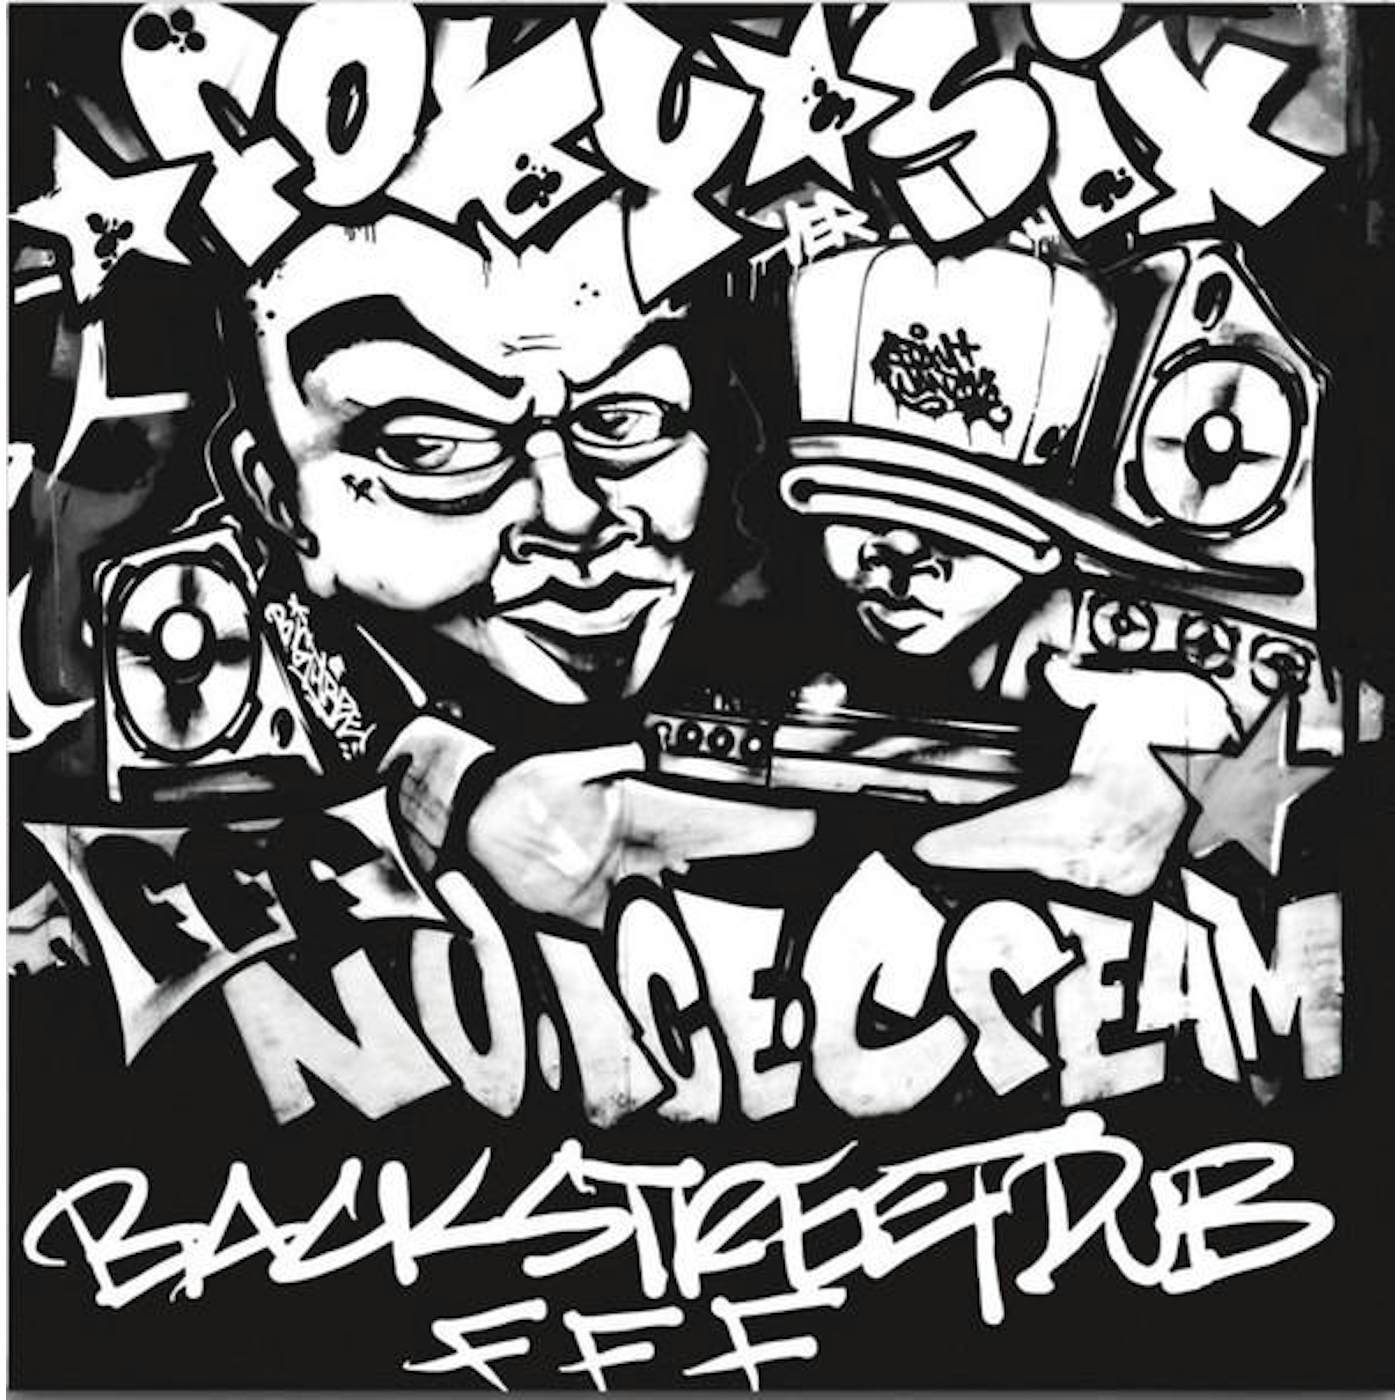 FFF No Ice Cream / Backstreet Dub Vinyl Record